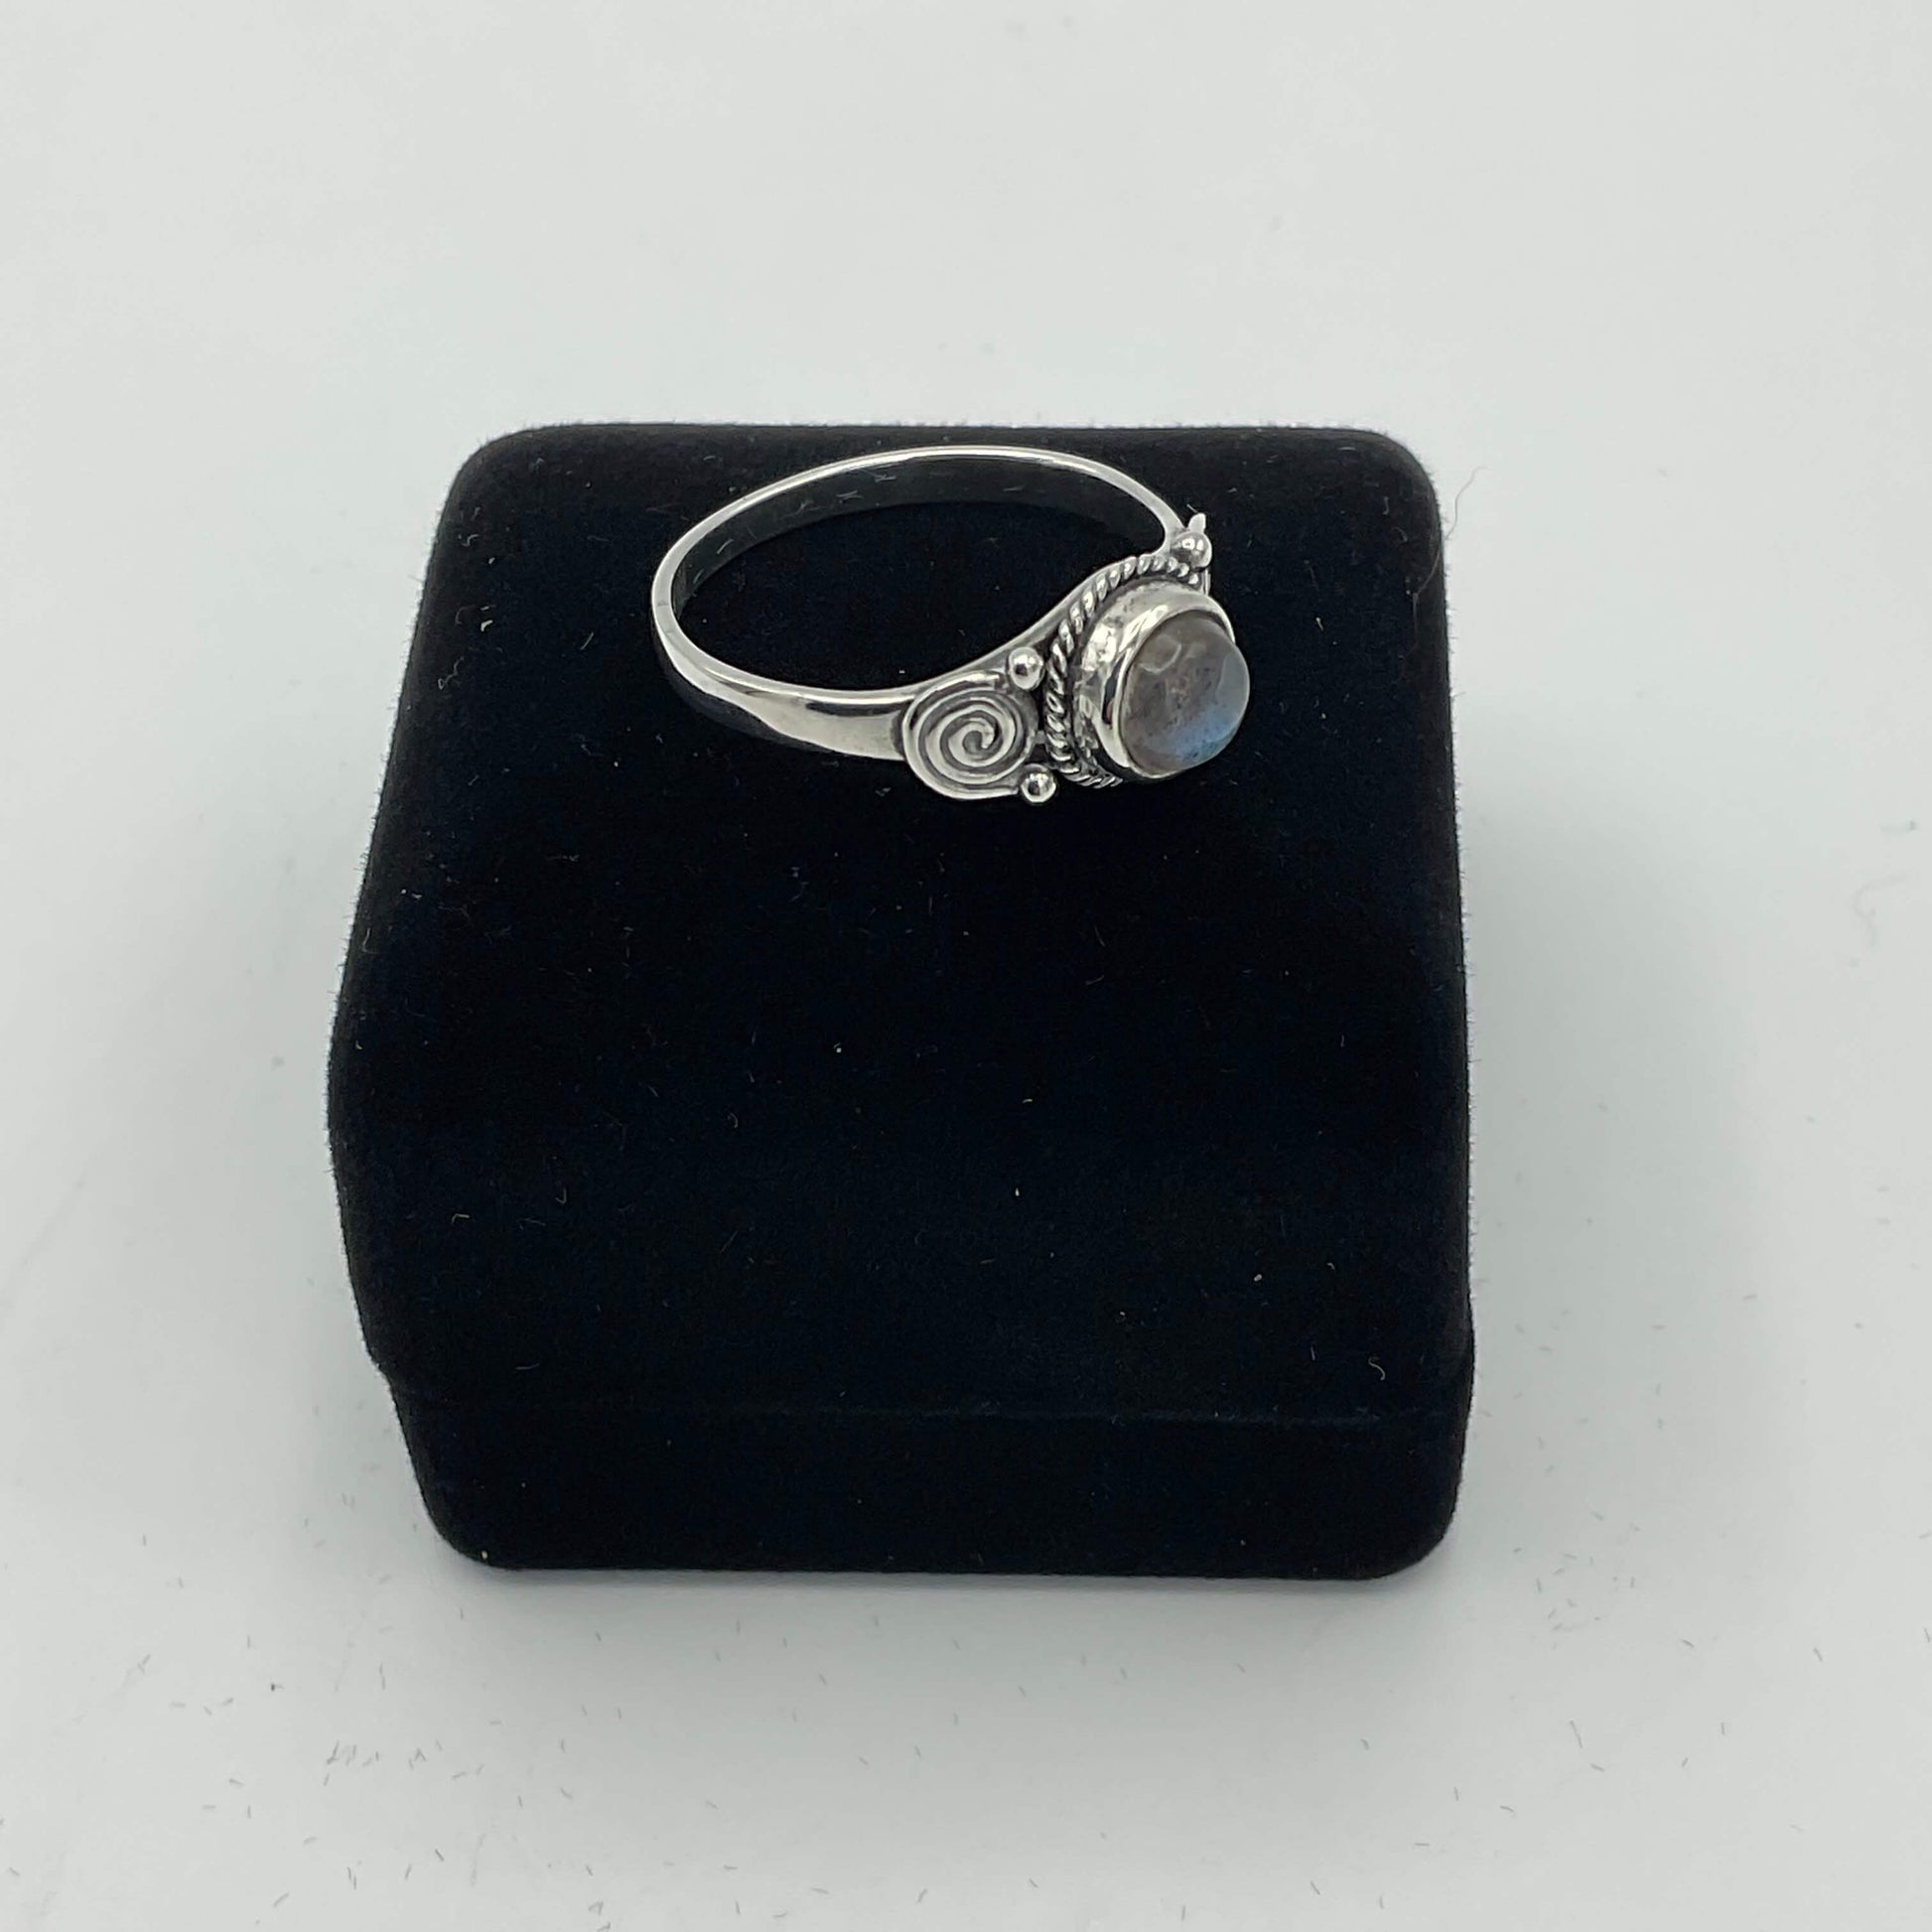 A moonstone silver ring sitting on a black presentation ring box